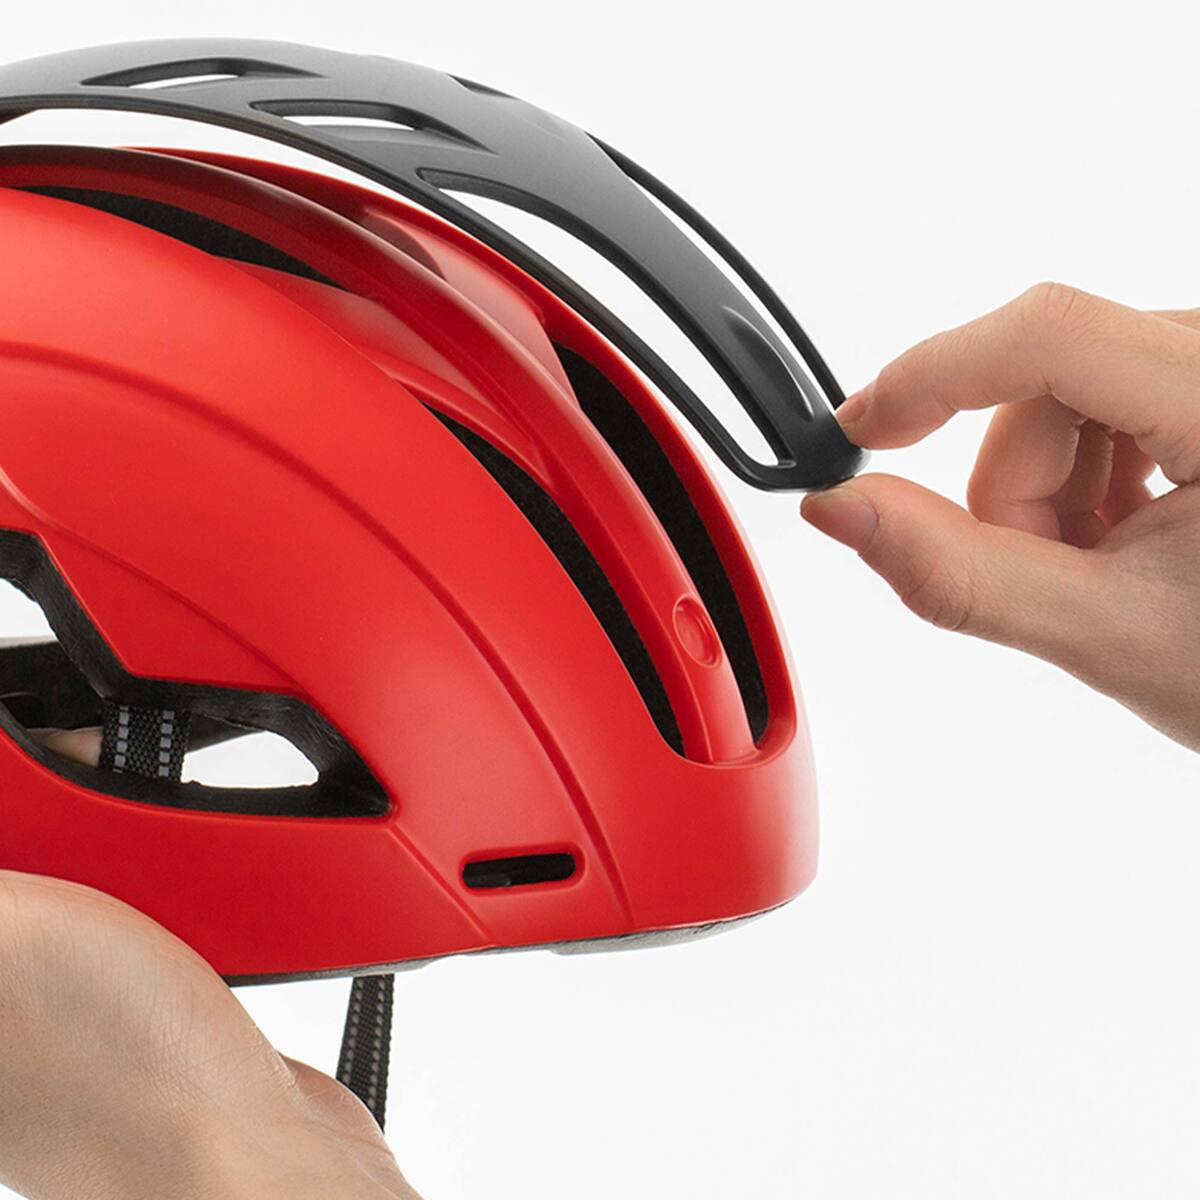 ROCKBROS Cycling Helmet TS-43-TI Titanium